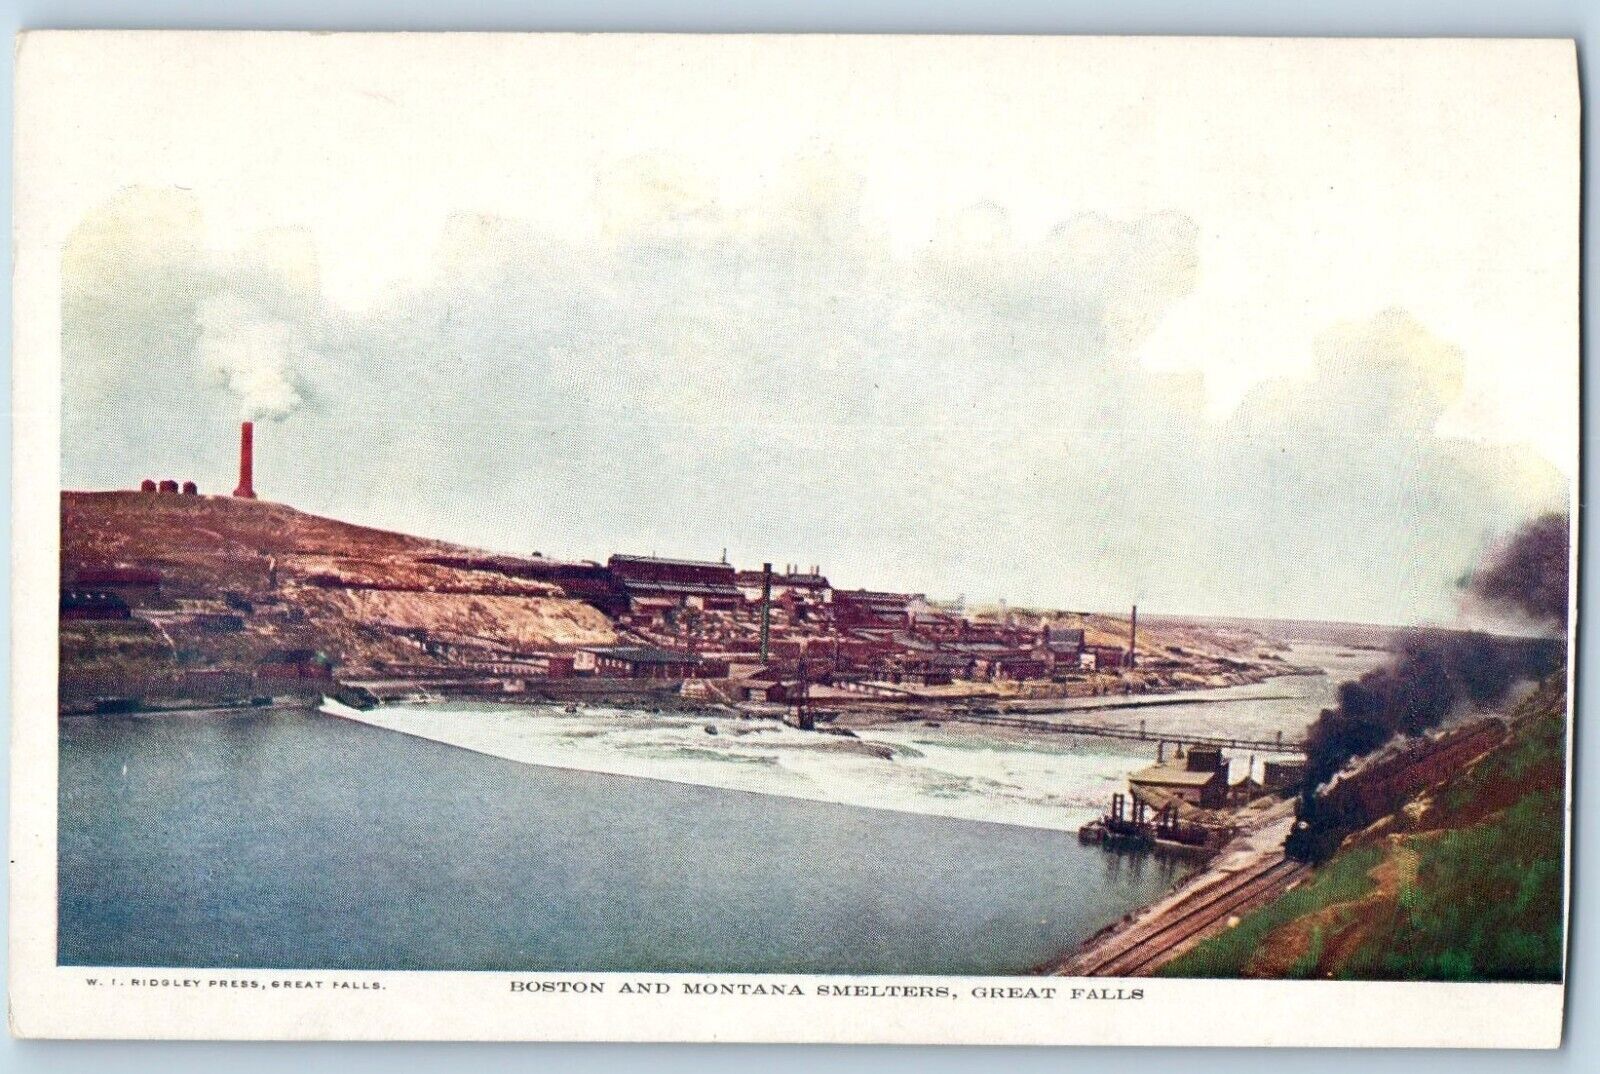 Great Falls Montana Postcard Boston Montana Smelters Locomotive Train Lake c1905